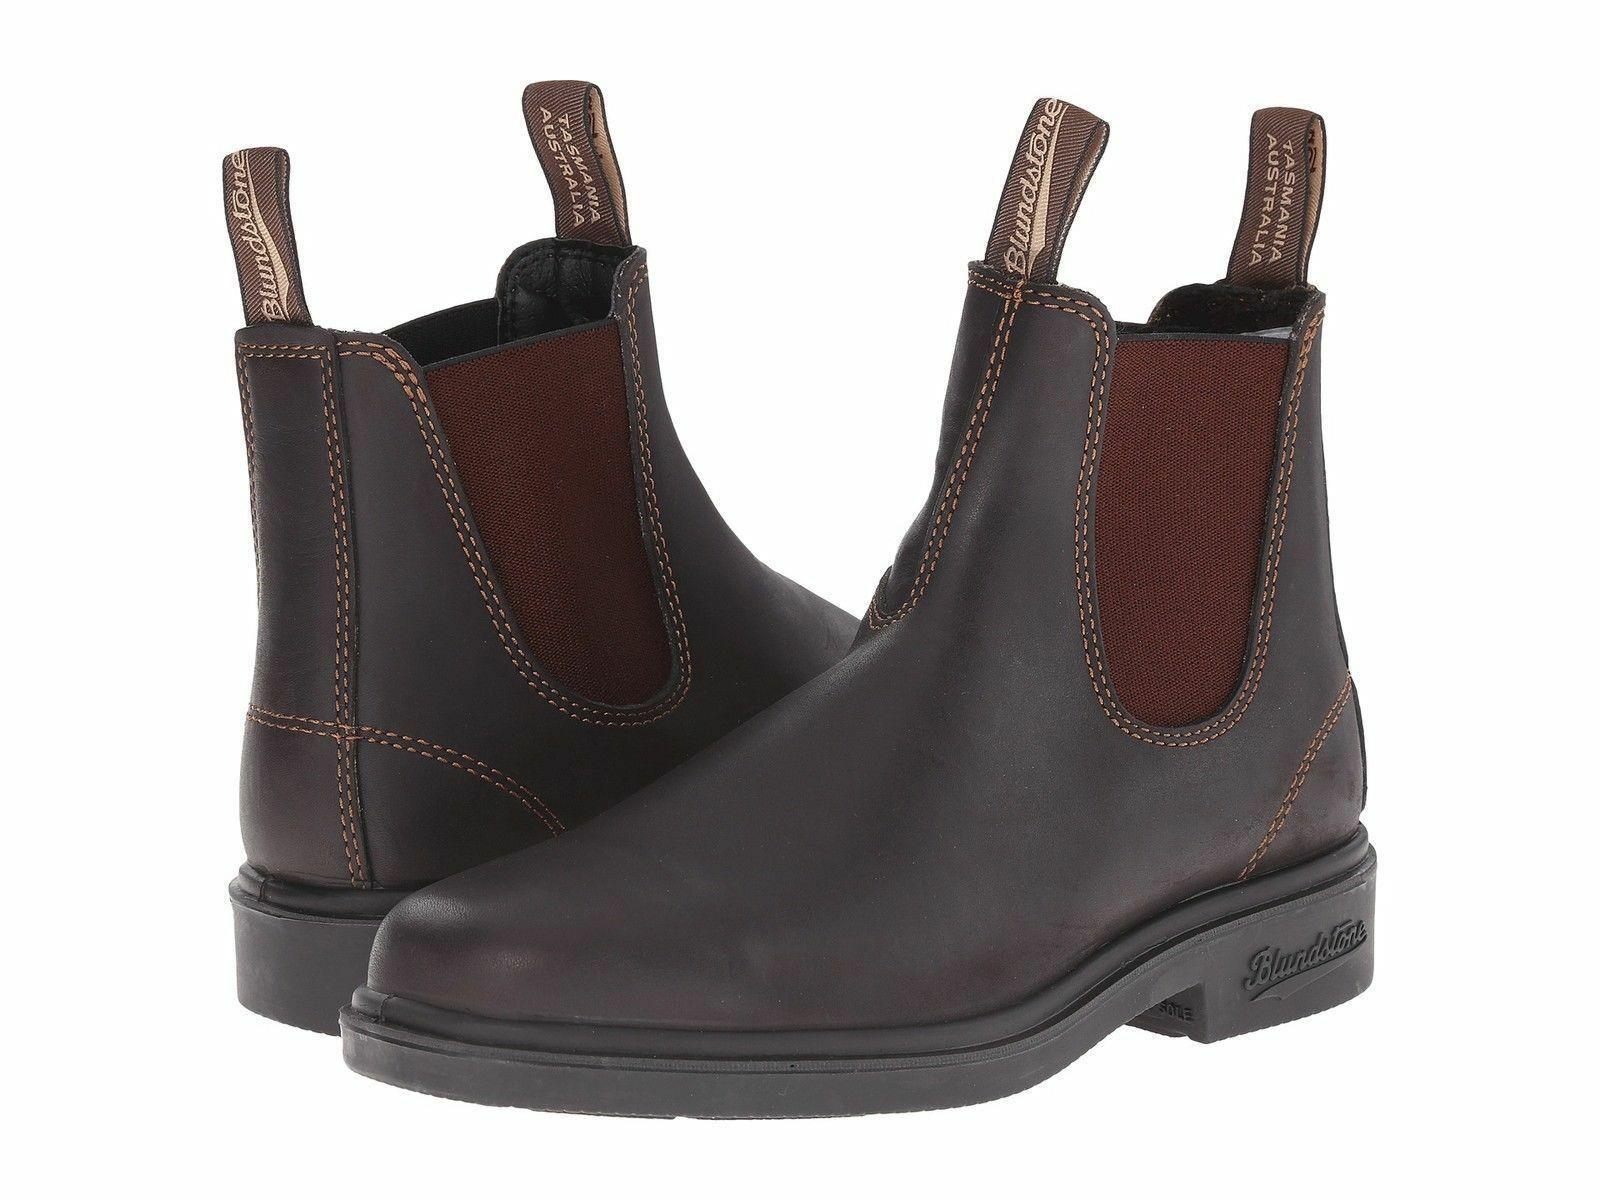 Blundstone 062 stout brown premium leather soft-toe chelsea dealer boot